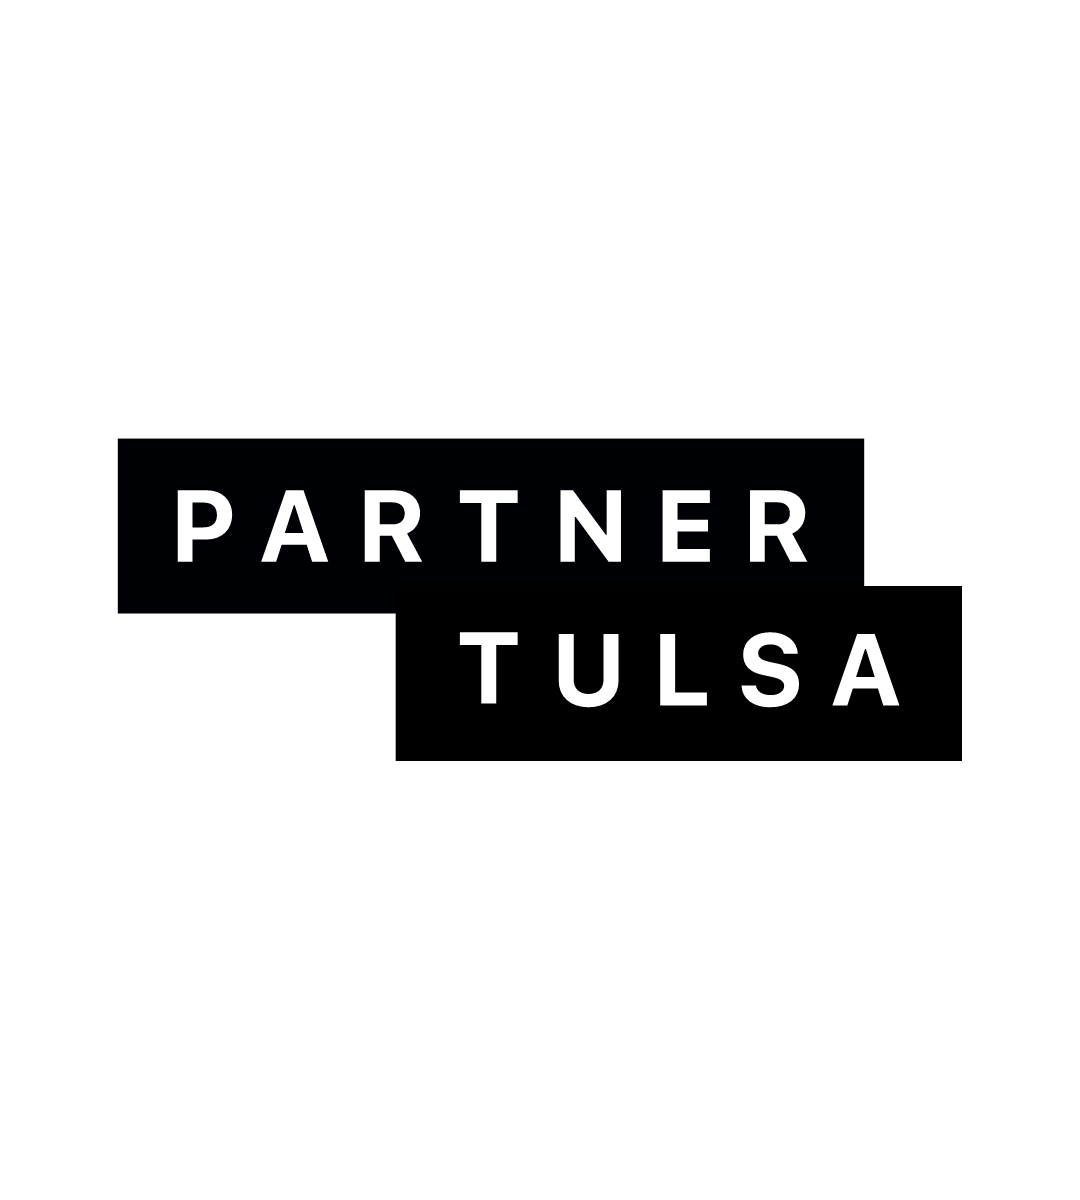 PartnerTulsa logo